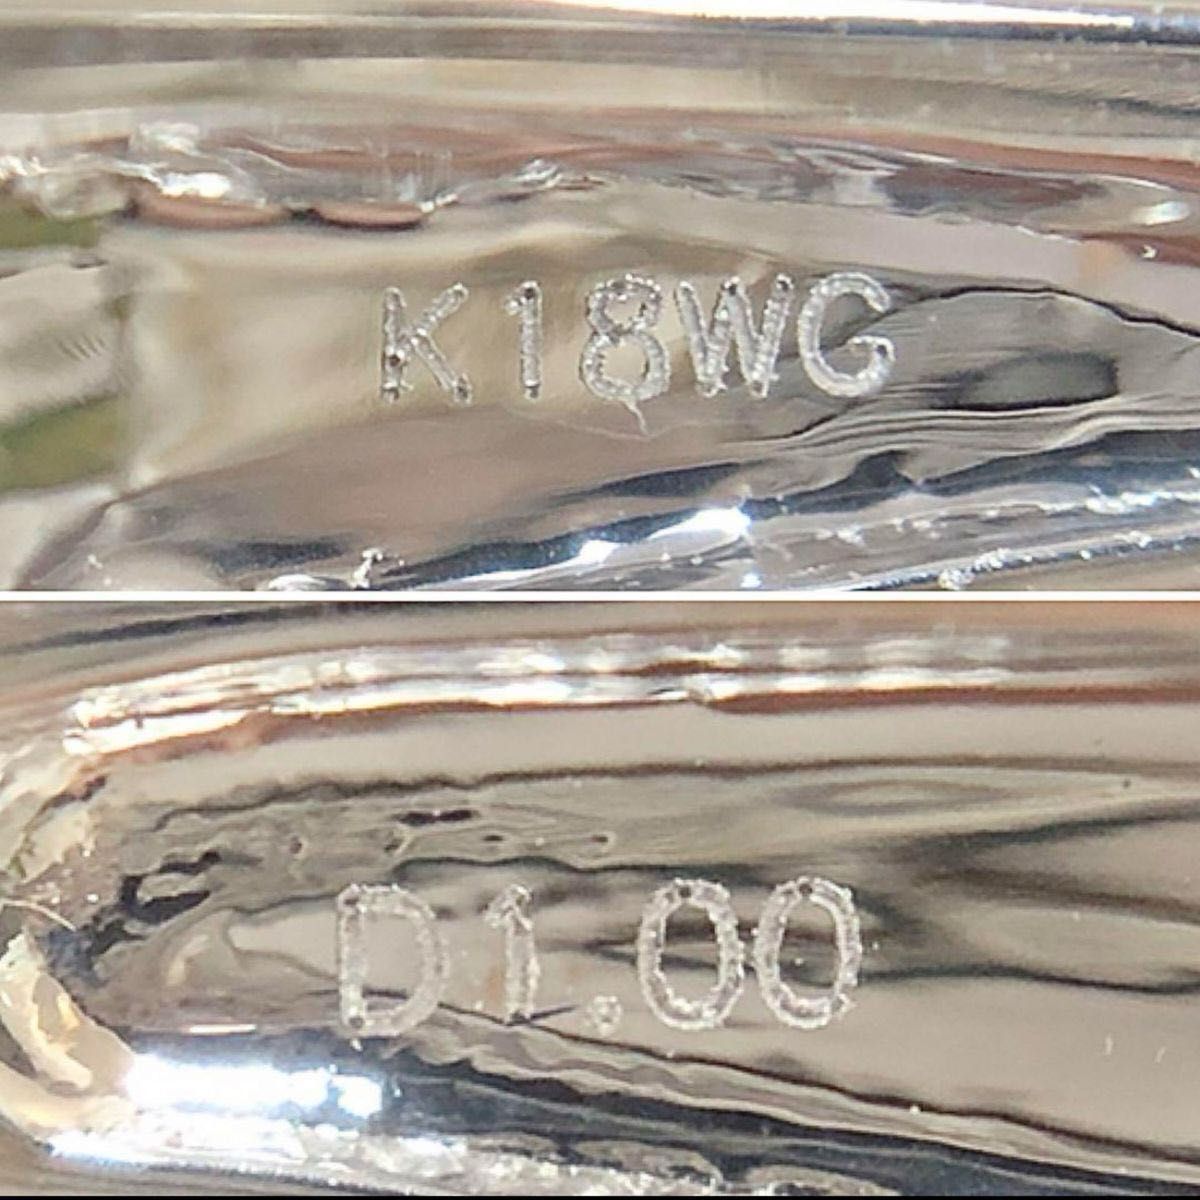 K18WG ブラック ダイヤモンド 1.00ct ダイヤ リング 指輪 男女兼用